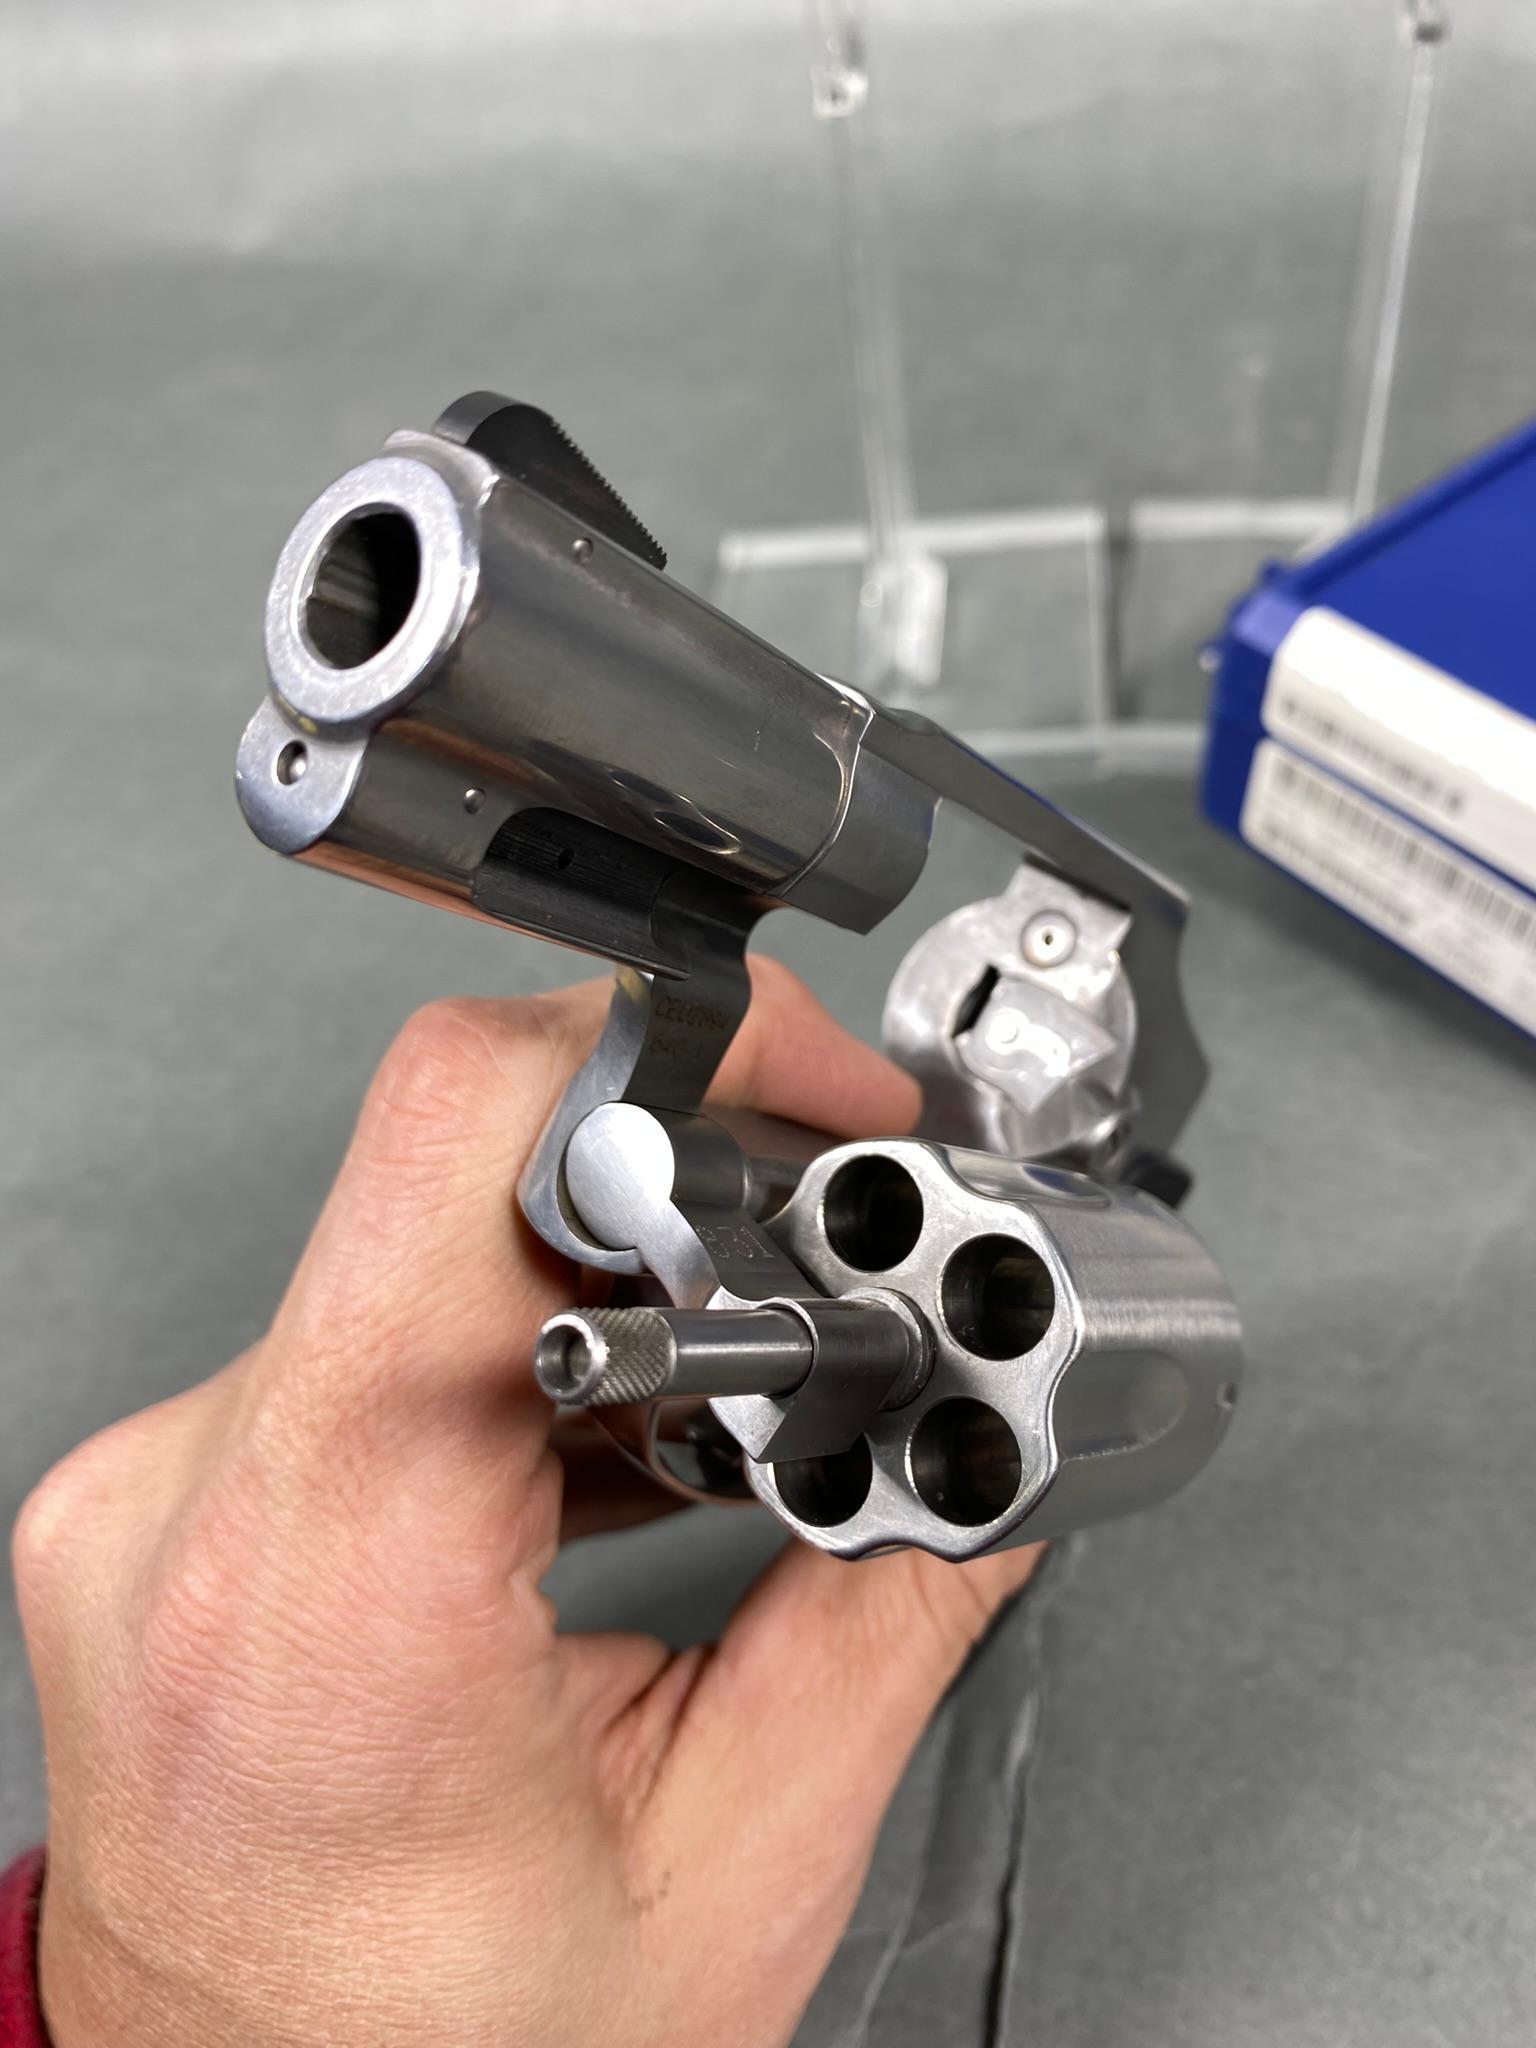 Smith & Wesson Model 640-1 357 Magnum Revolver Hammerless